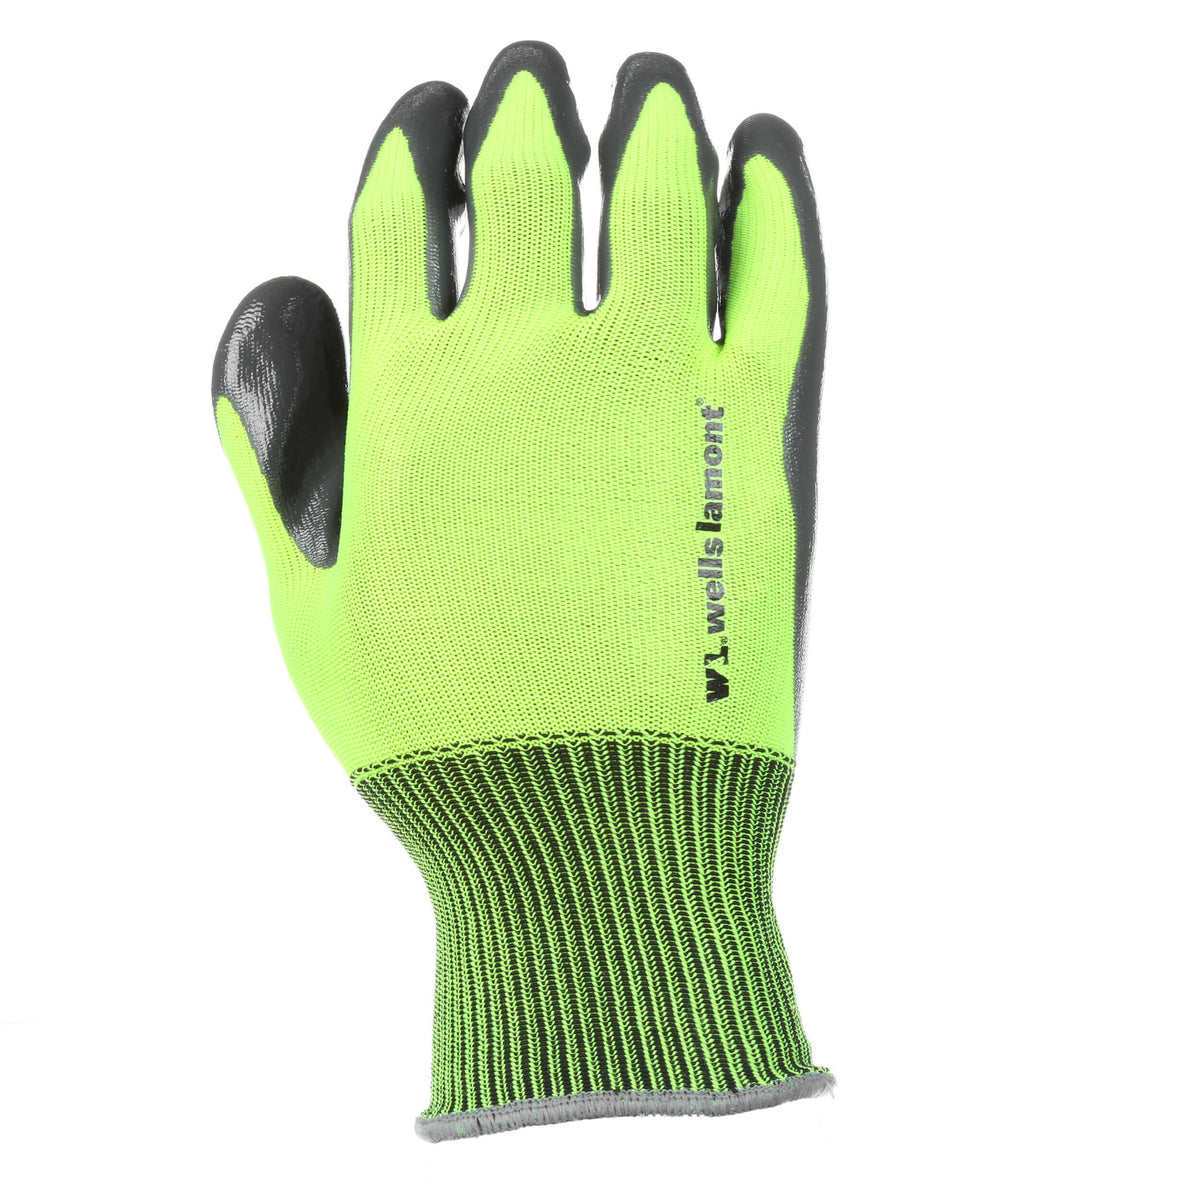 Wells Lamont 3-Pair Pack Nitrile Coated Grip Work Gloves - Work World - Workwear, Work Boots, Safety Gear